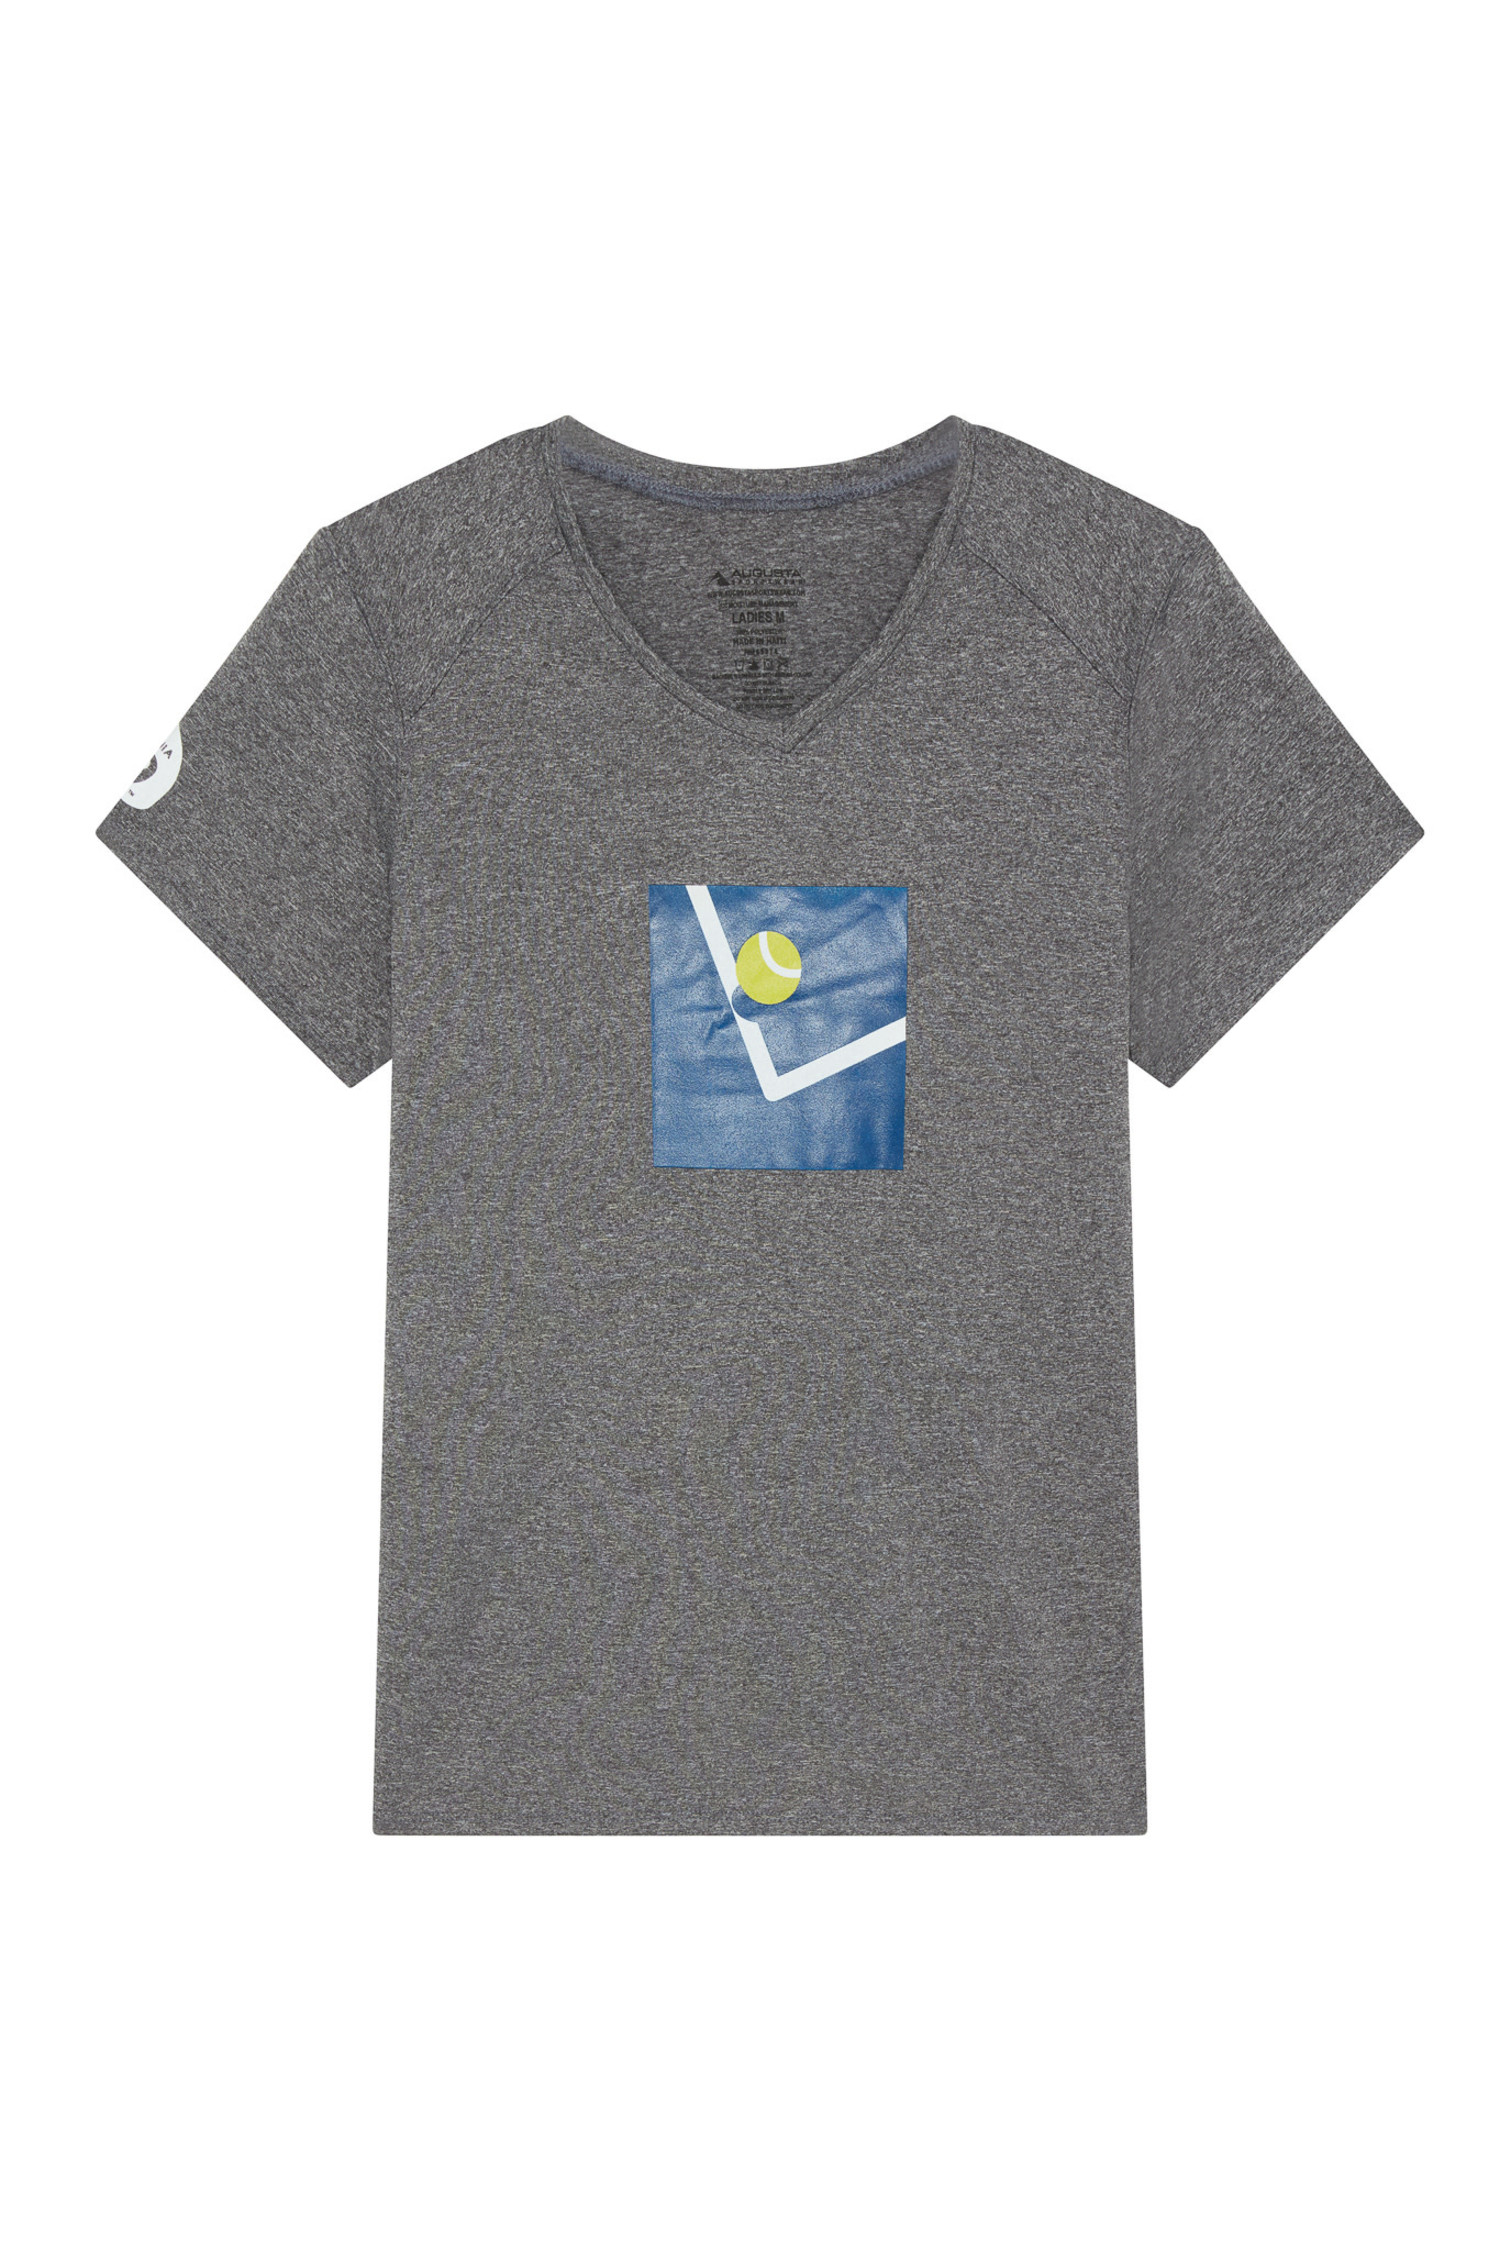 Avalanche Outdoor Supply Company T-Shirt  Company t-shirt, Gym shorts  womens, T shirt